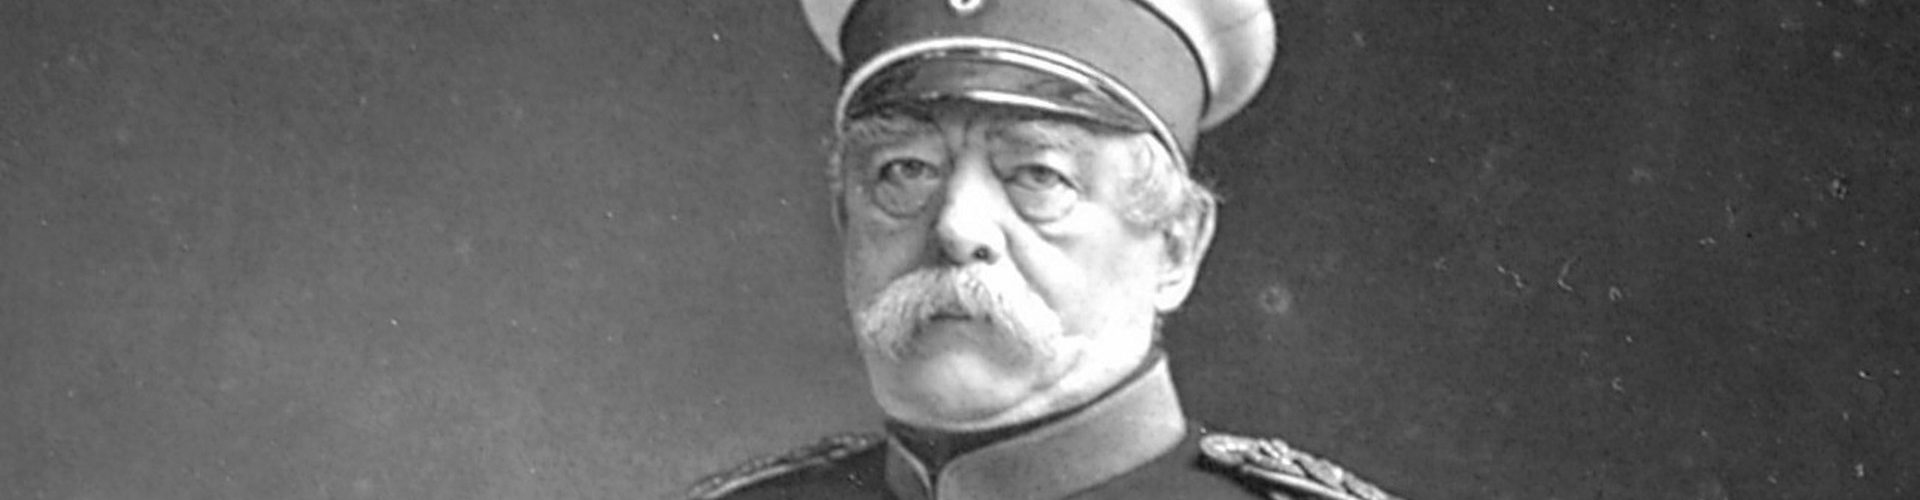 Kanclerz Otto von Bismarck około 1875 roku.